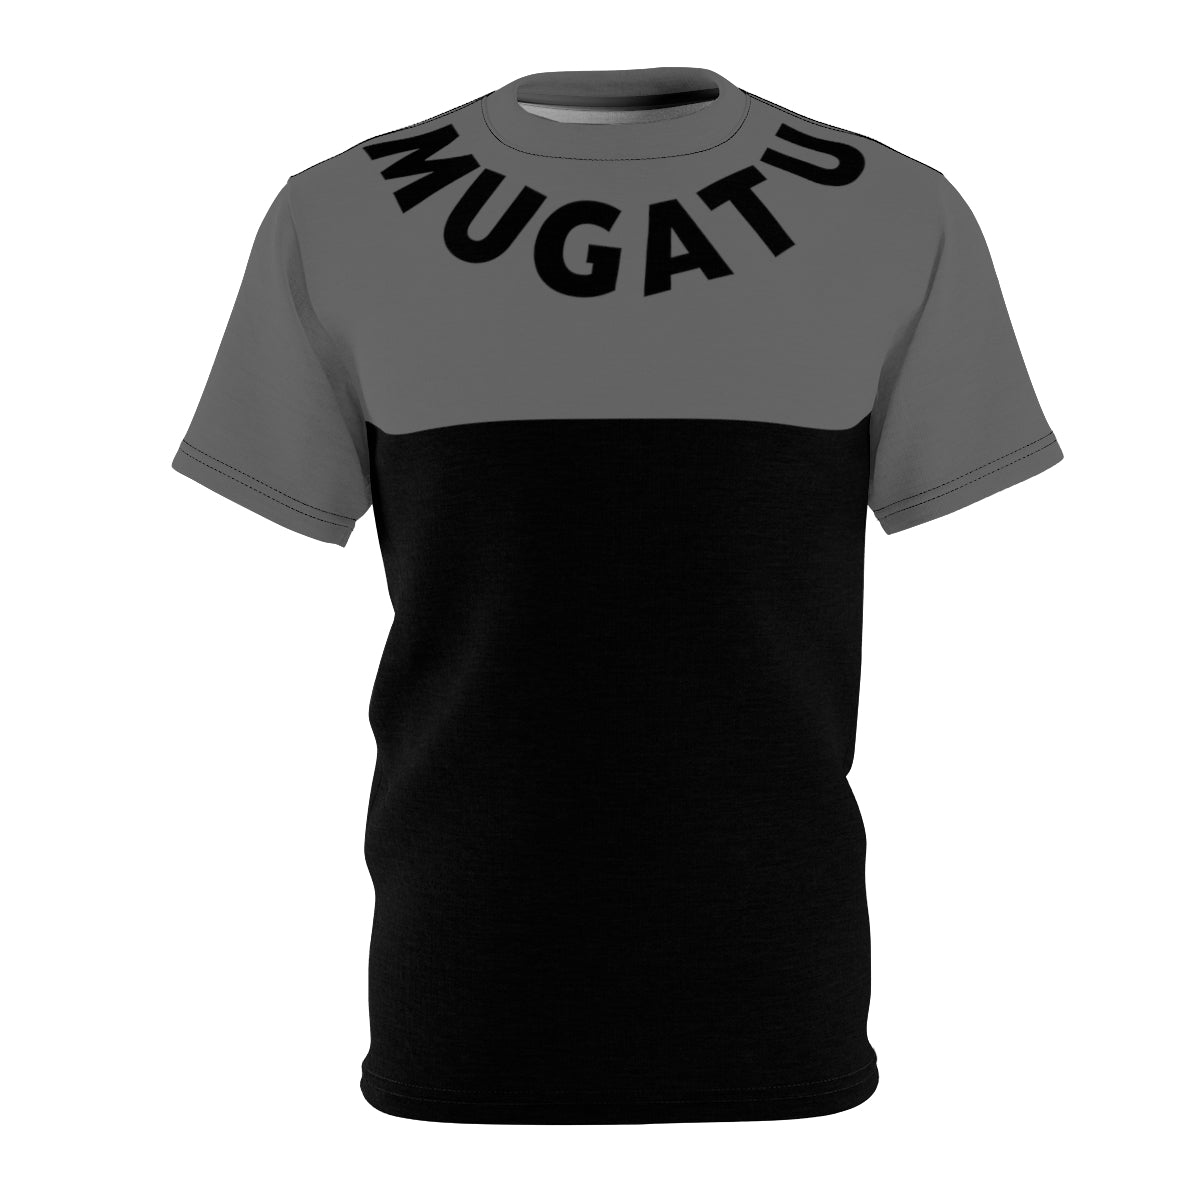 Mugatu "Zoolander" | Fashion Freak T-shirt